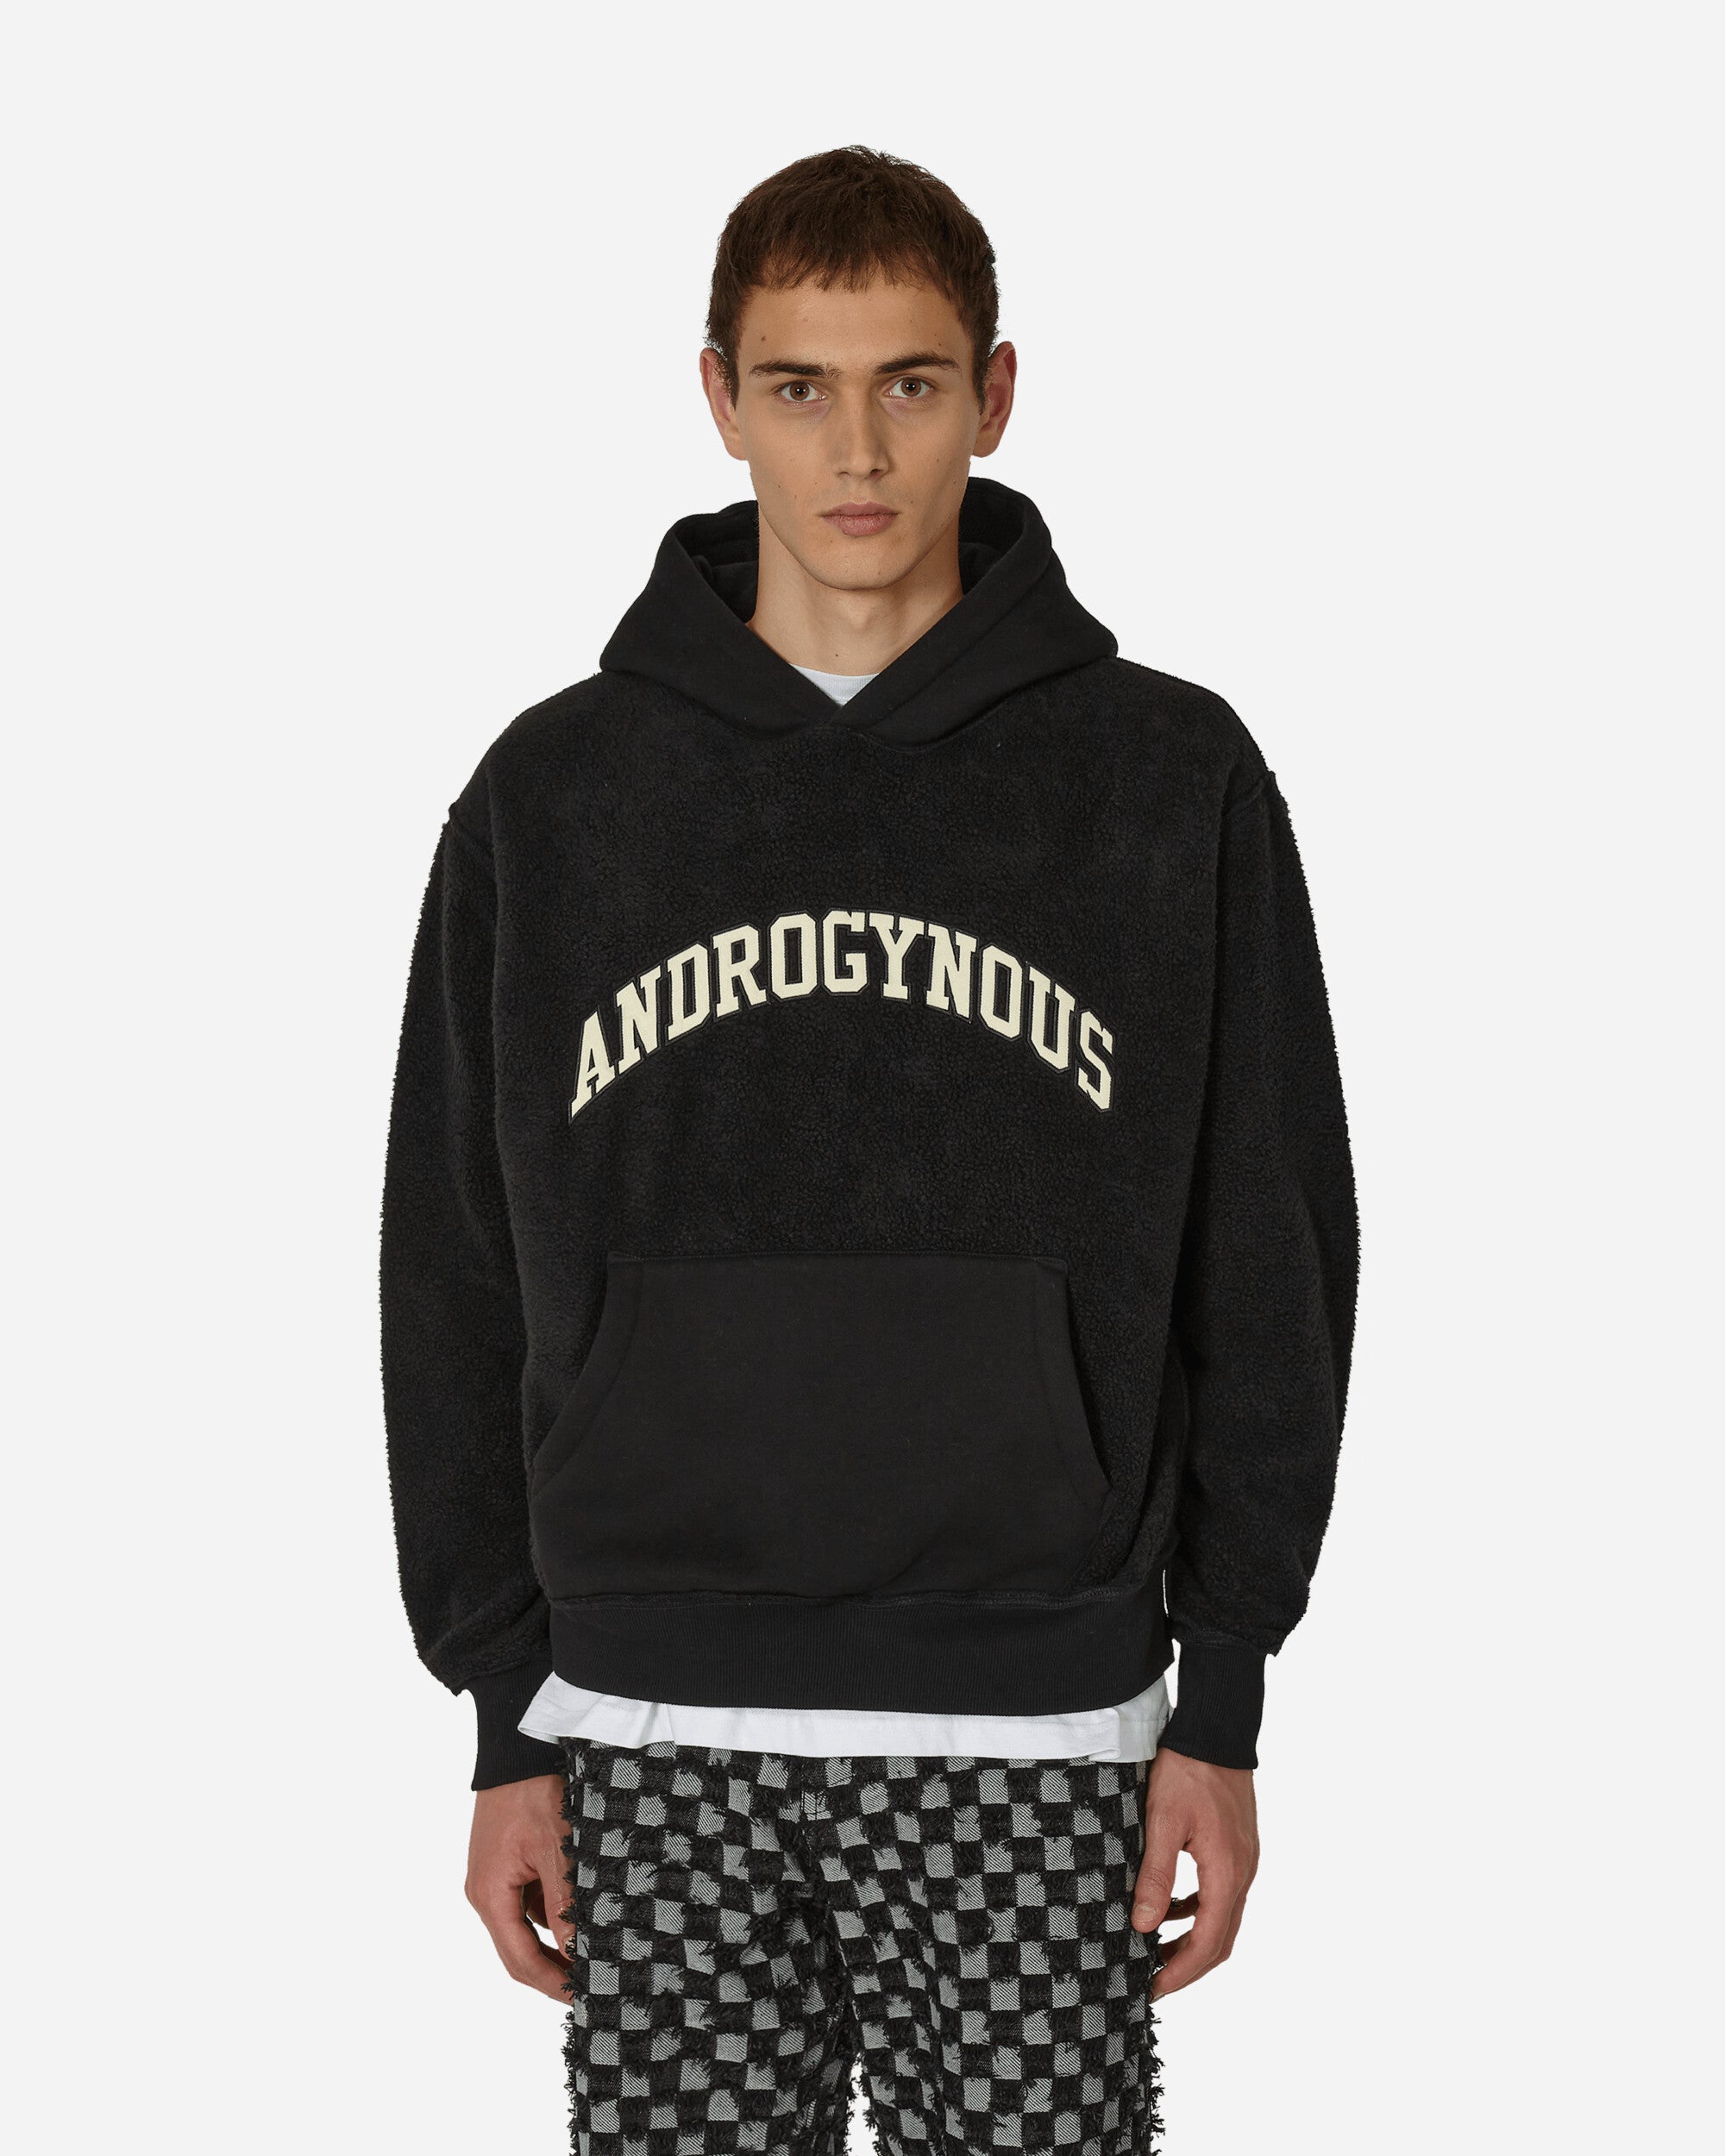 Androgynous Hooded Sweatshirt Black